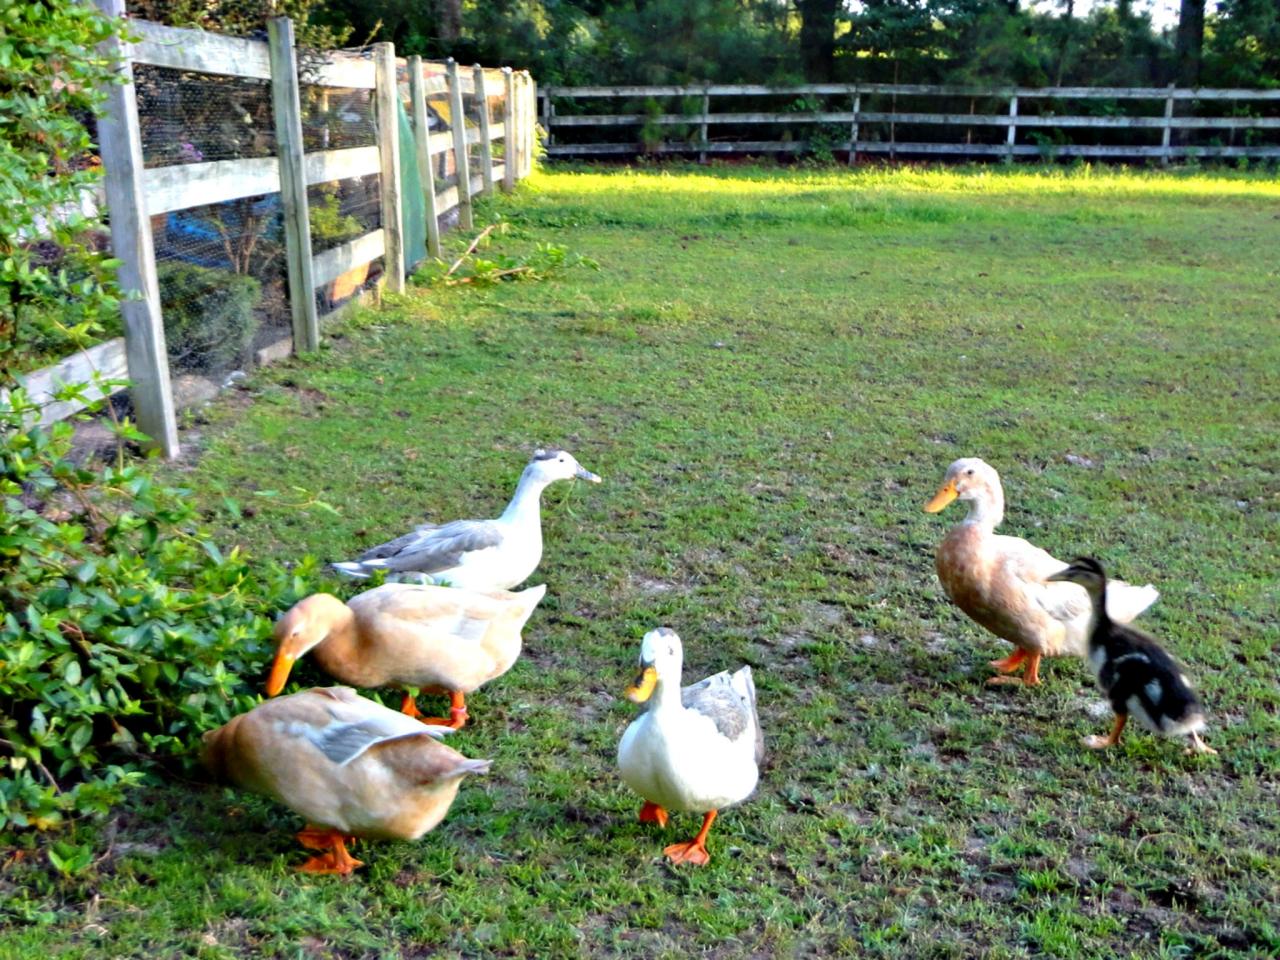 How Toxic Plants Can Harm Backyard Ducks | HGTV